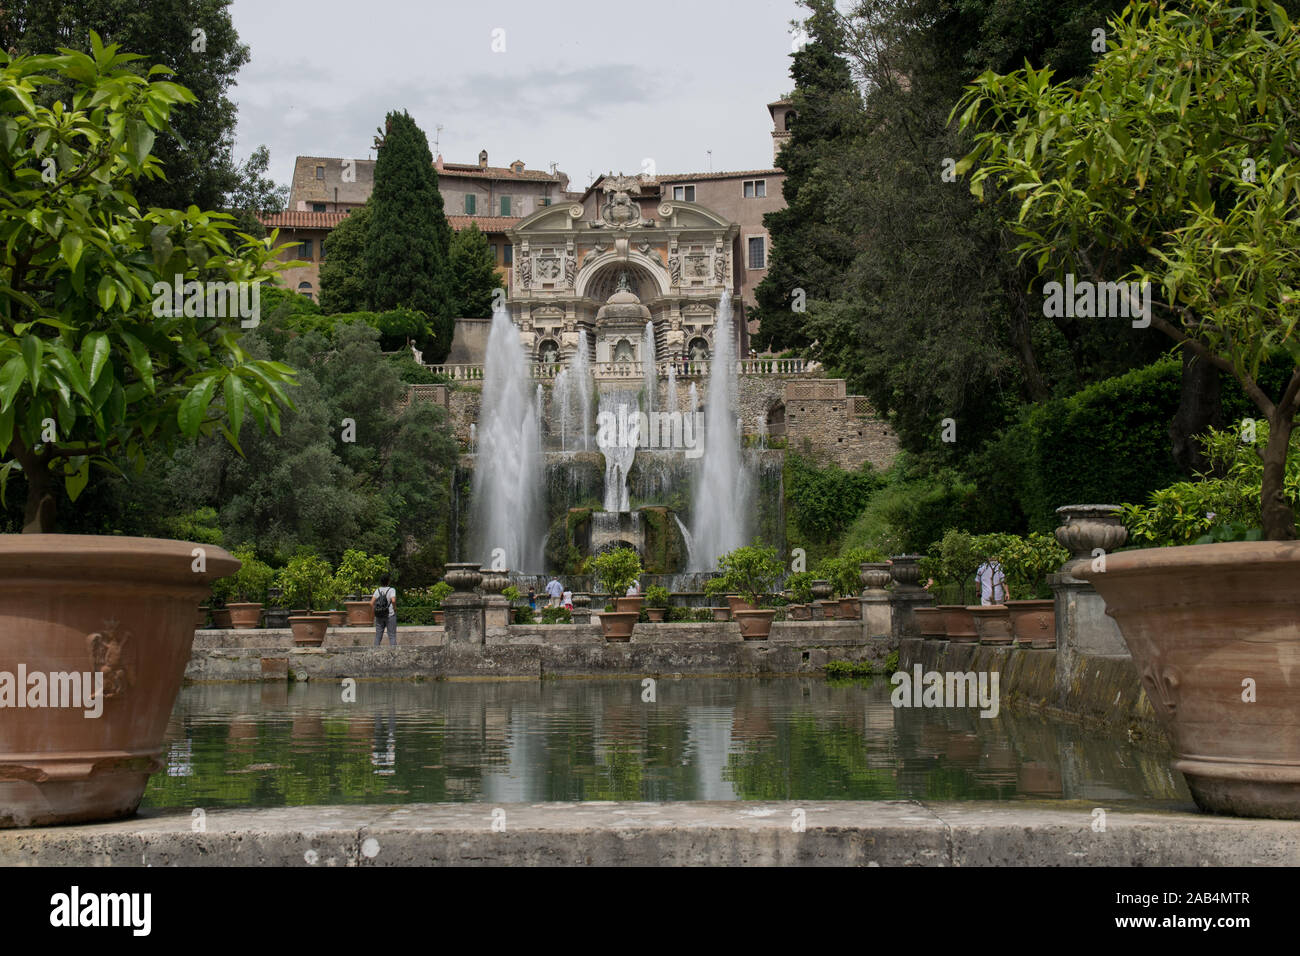 La splendida Villa d'Estecon con la sua meravigliosa cento fontane Foto Stock